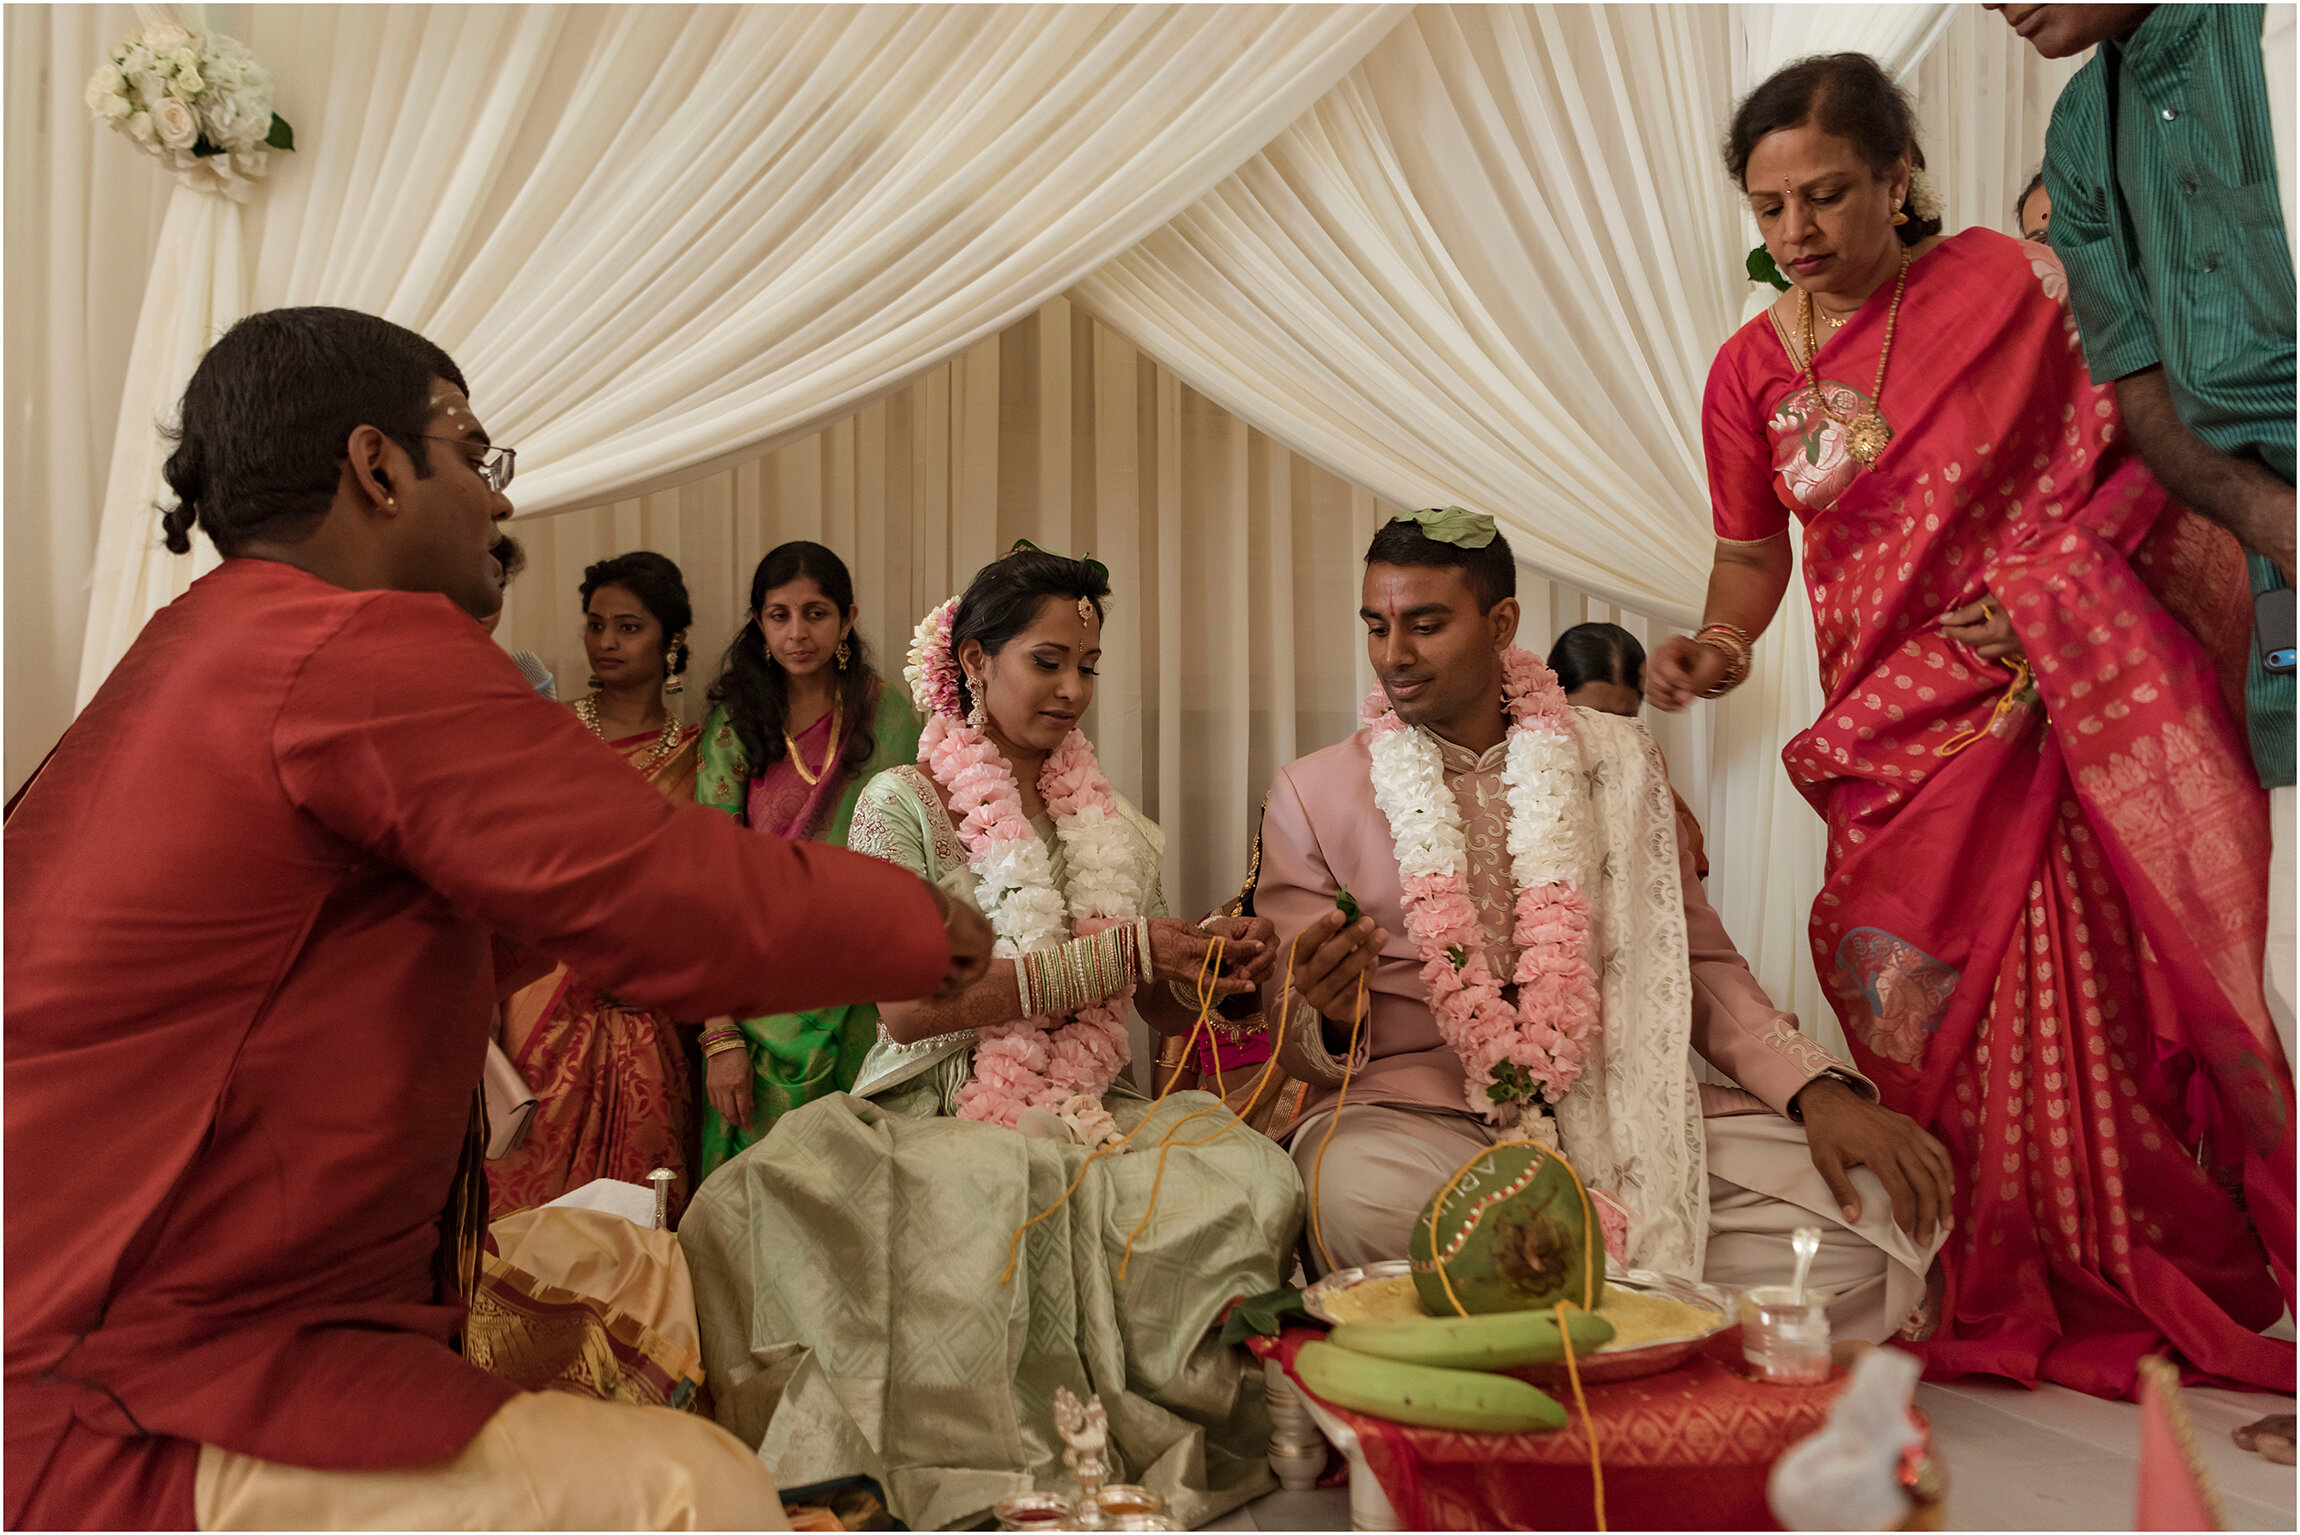 ©FianderFoto_Hindu Wedding_Bermuda_046.jpg